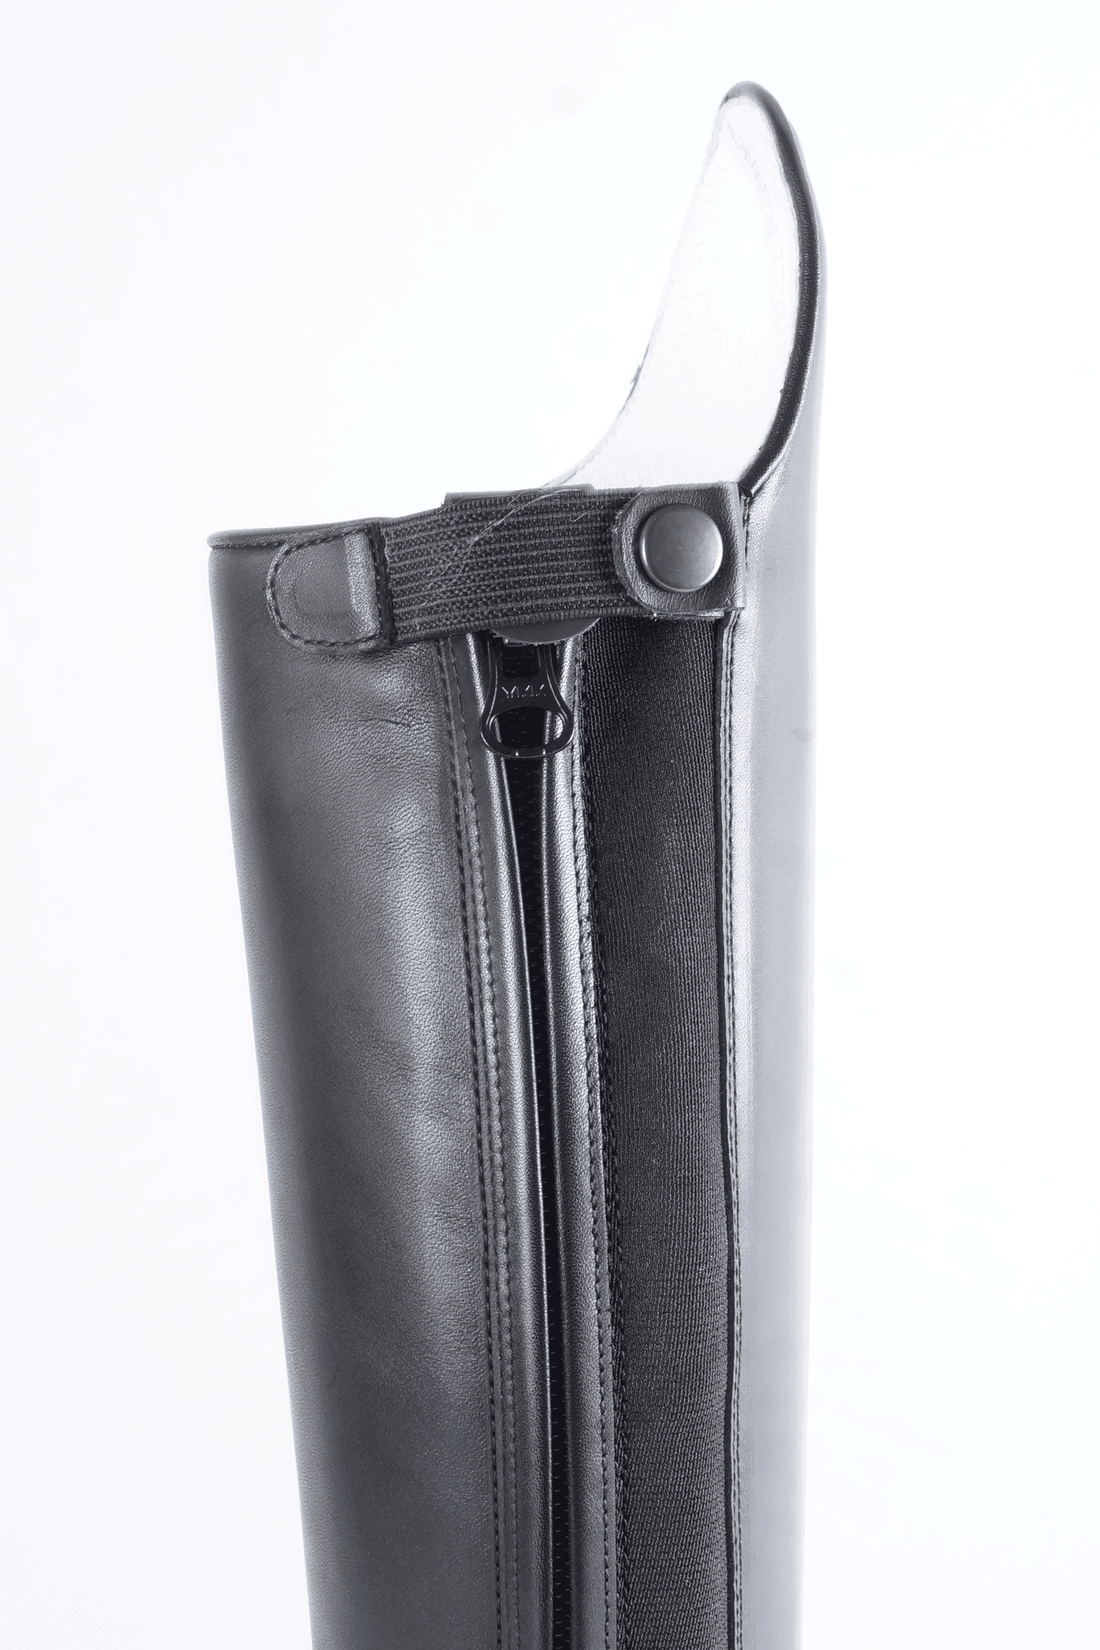 De Niro Tricolore Puro dress boot smooth black leather - HorseworldEU